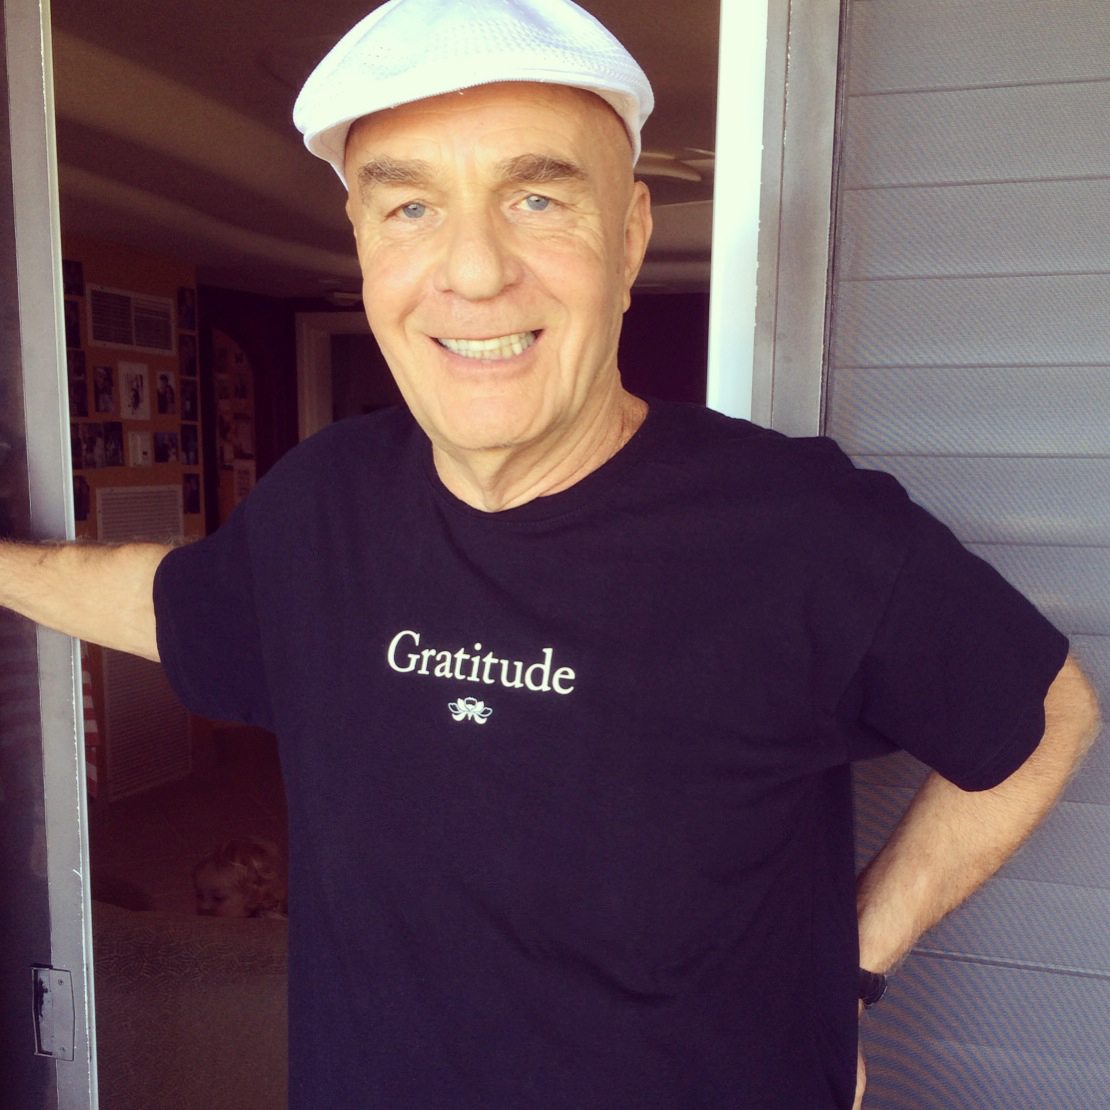 Wayne Dyer wearing Gratitude T-shirt